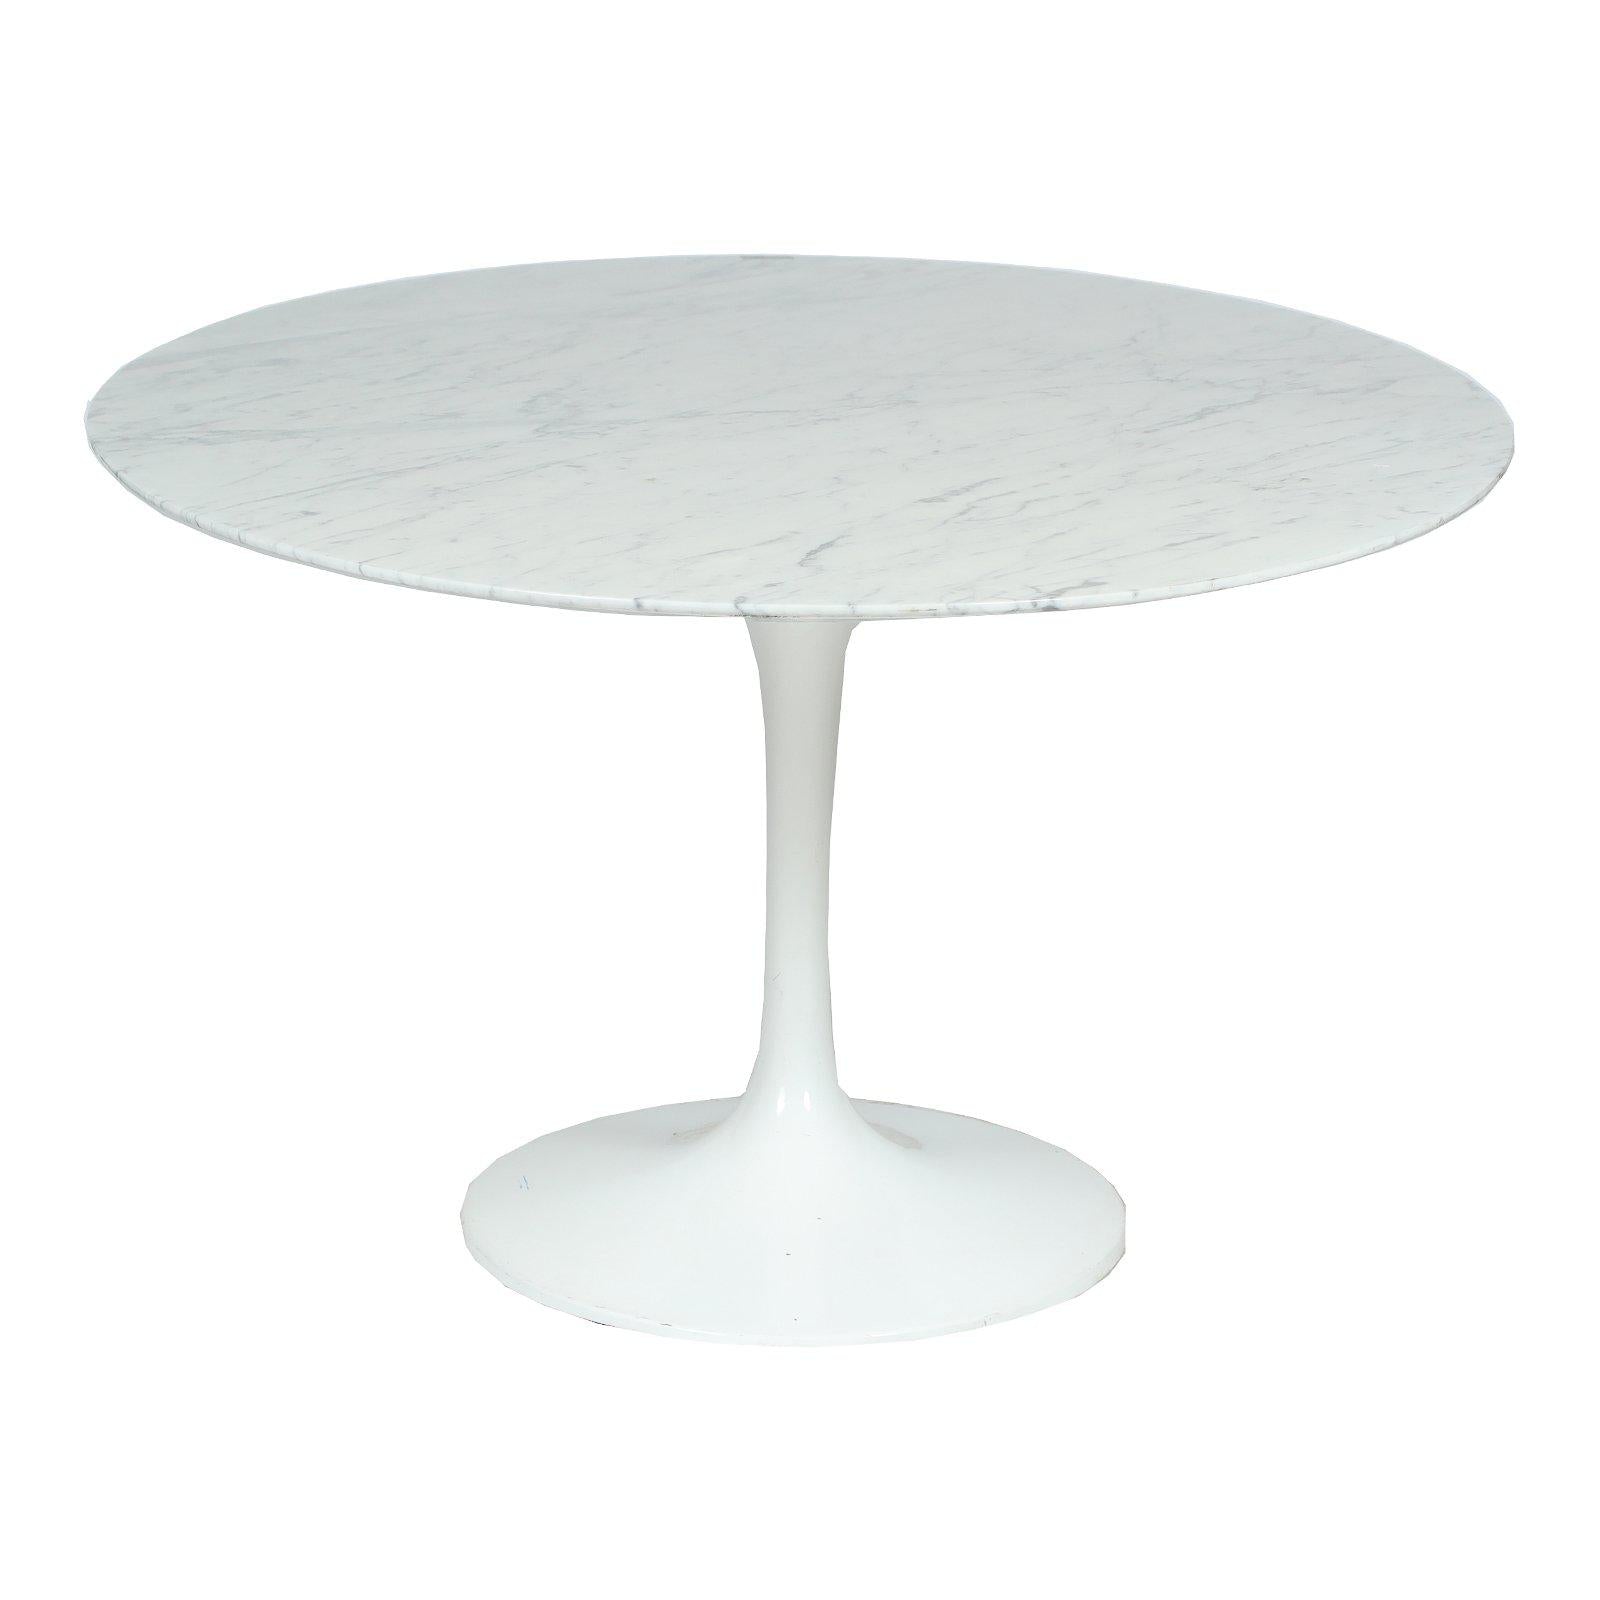 Table marbre - Inspiration Tulip Chair Saarinen occasion - Blanc - 200 x 100 x 75 cm-Bluedigo